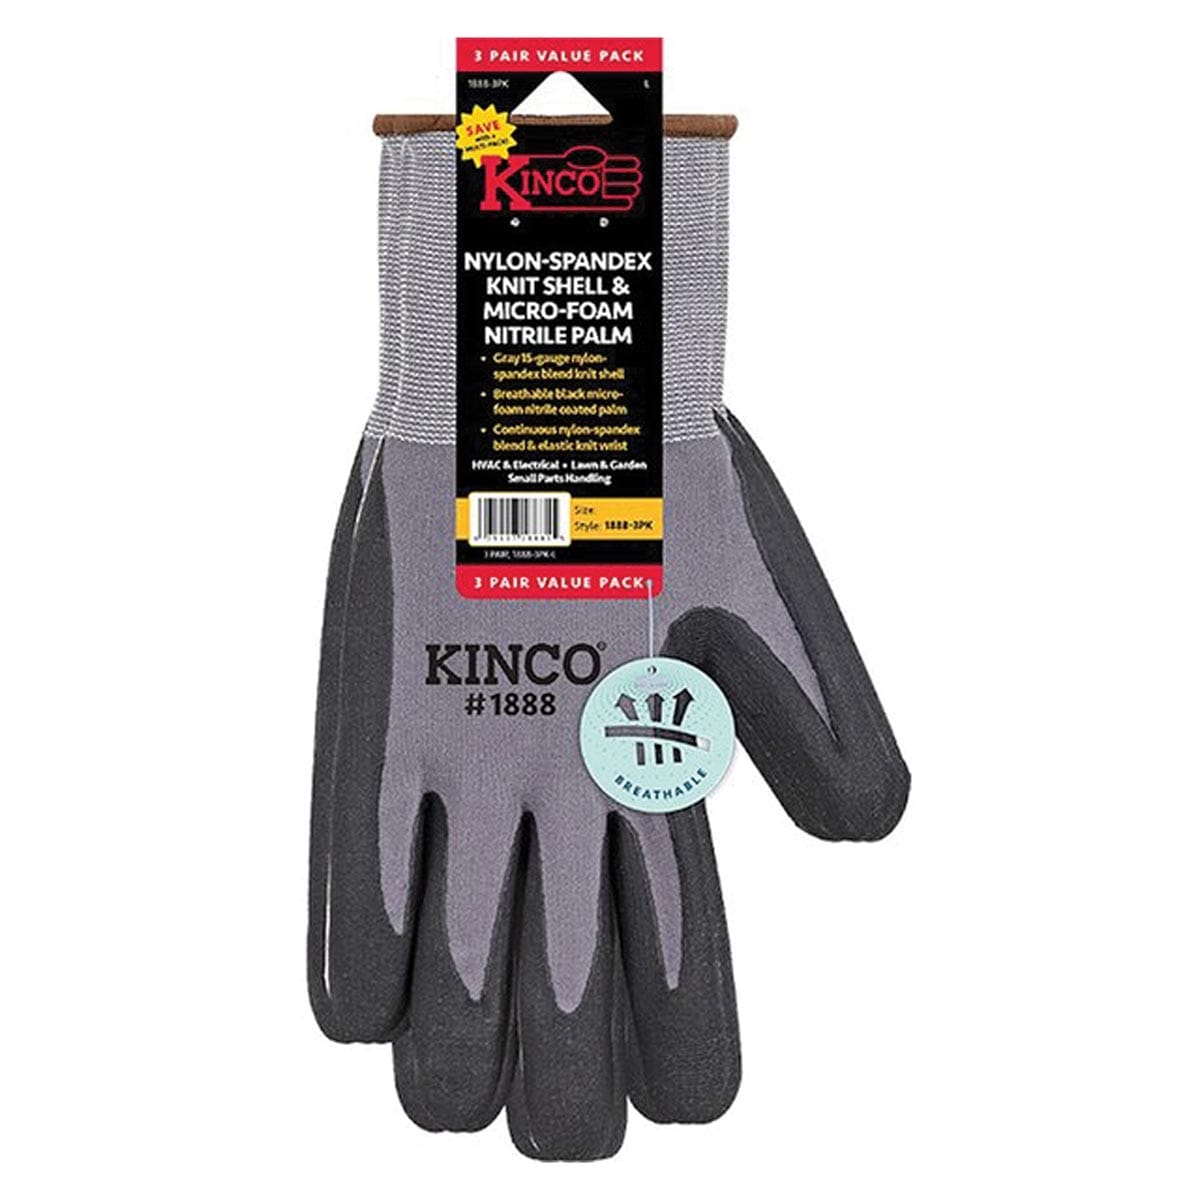 Kinco Nylon Knit Shell with Micro-Foam Nitrile Palm Glove